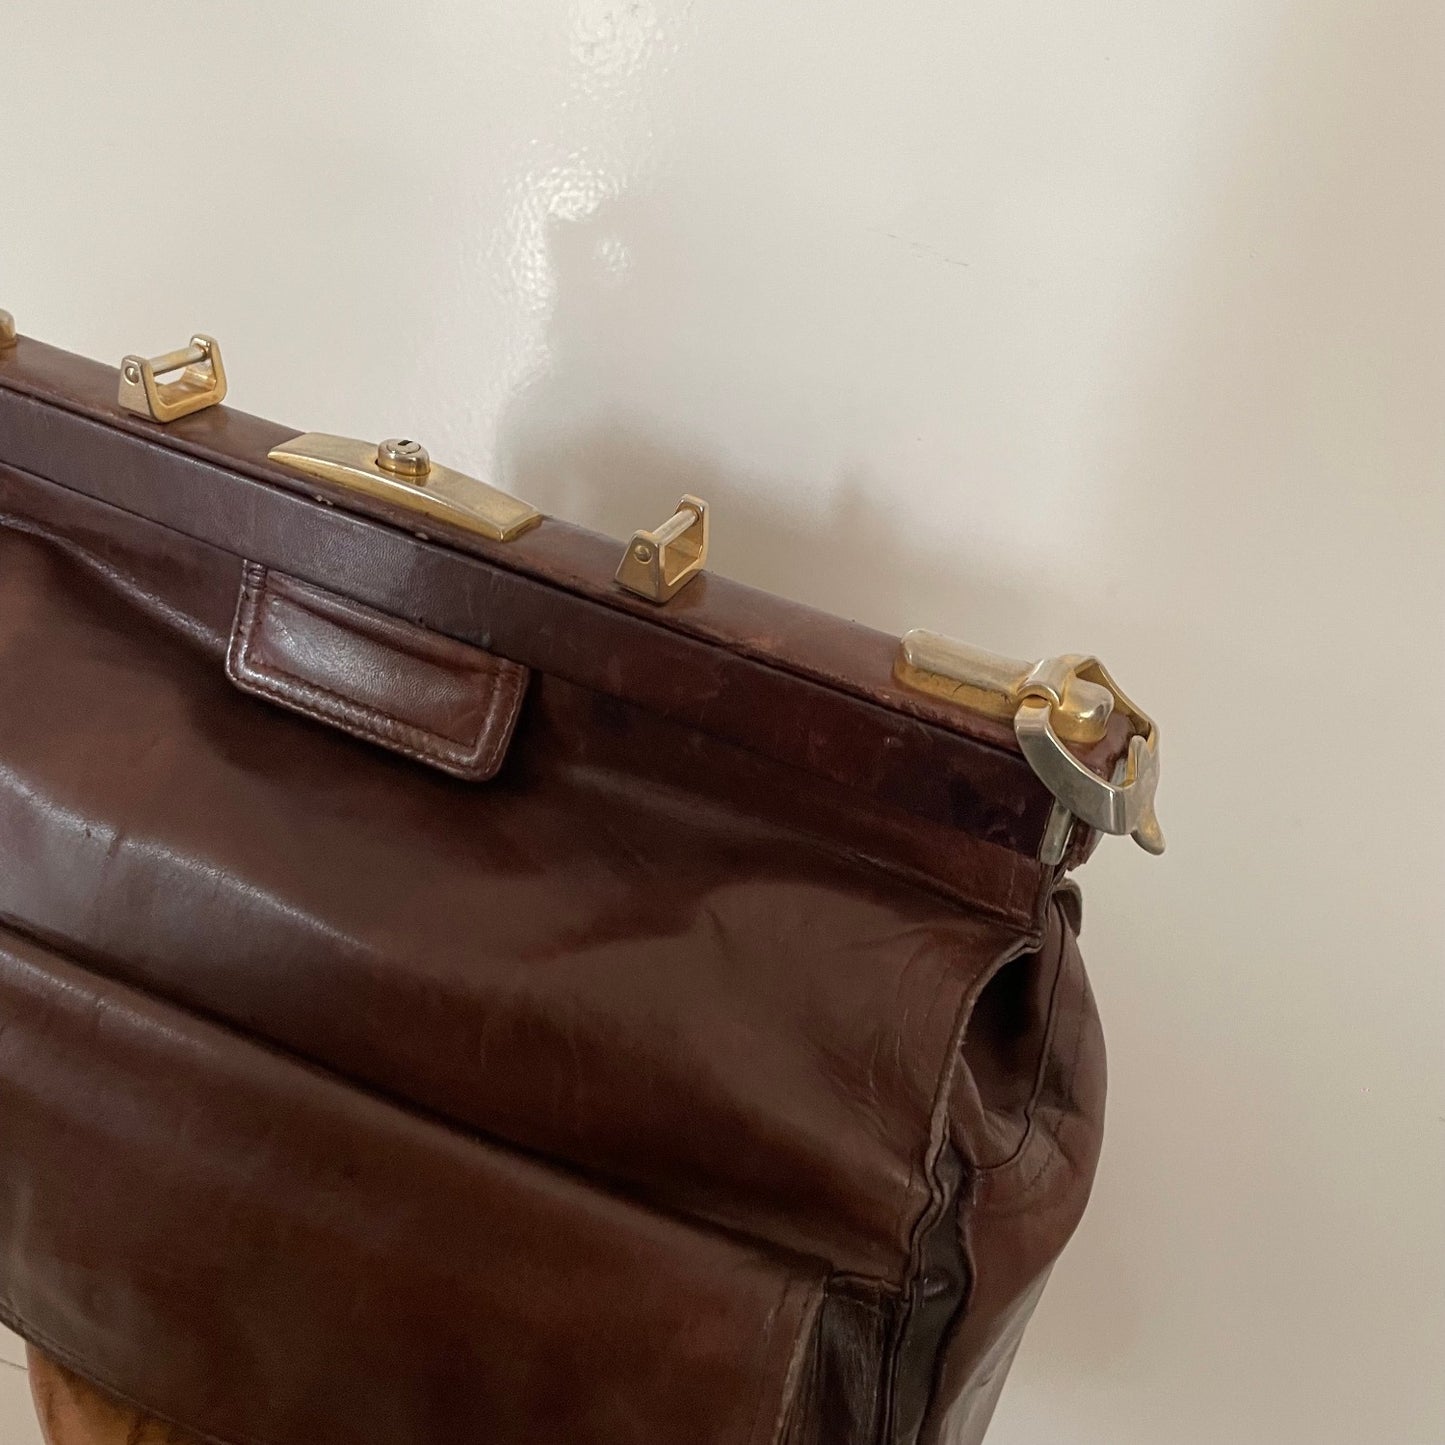 Vintage Lancel Brown Genuine Leather Doctor Bag from Paris